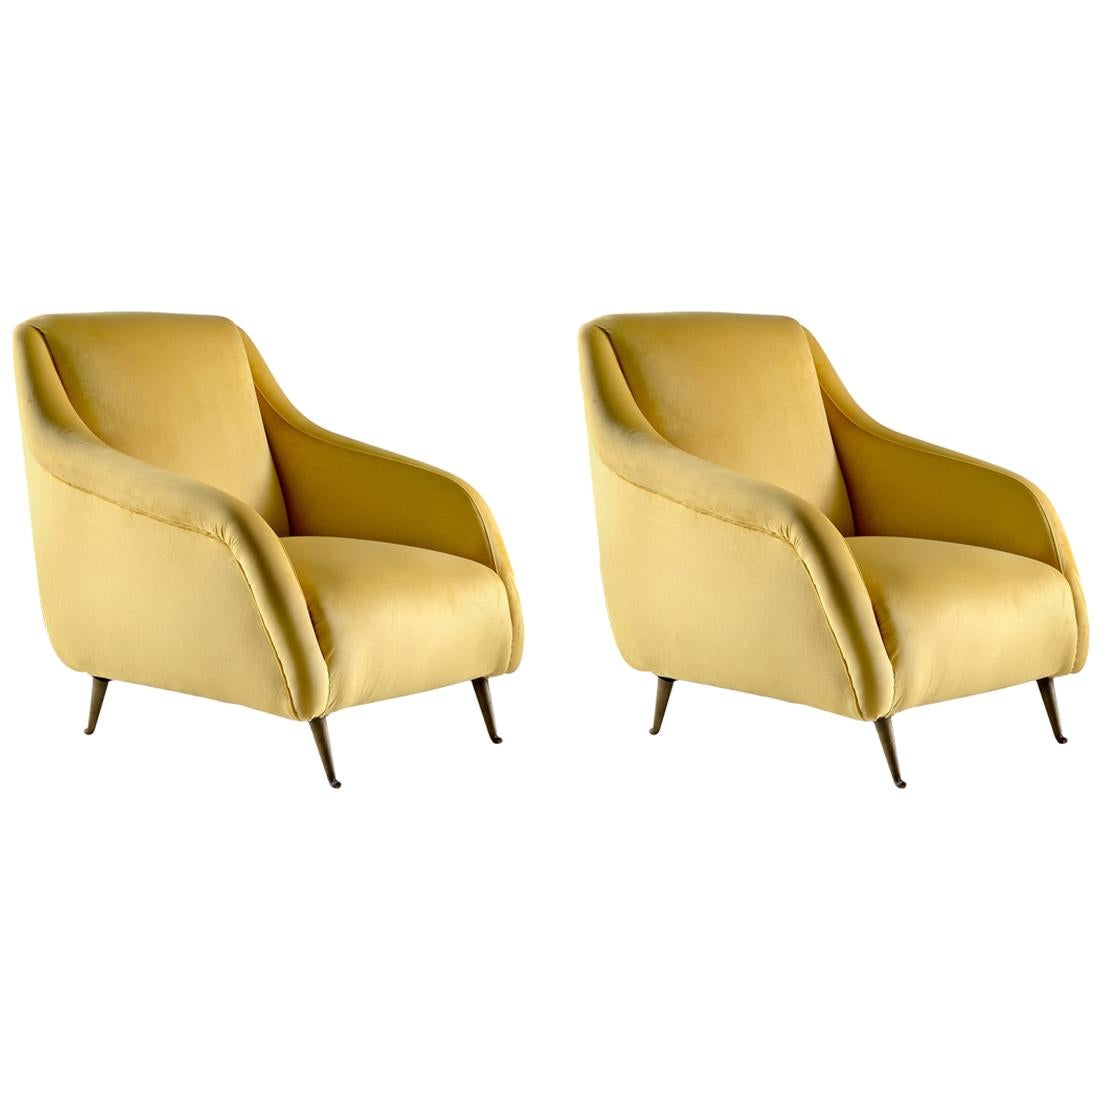 Pair of Armchairs in the Style of Carlo de Carli Italian Design, circa 1950